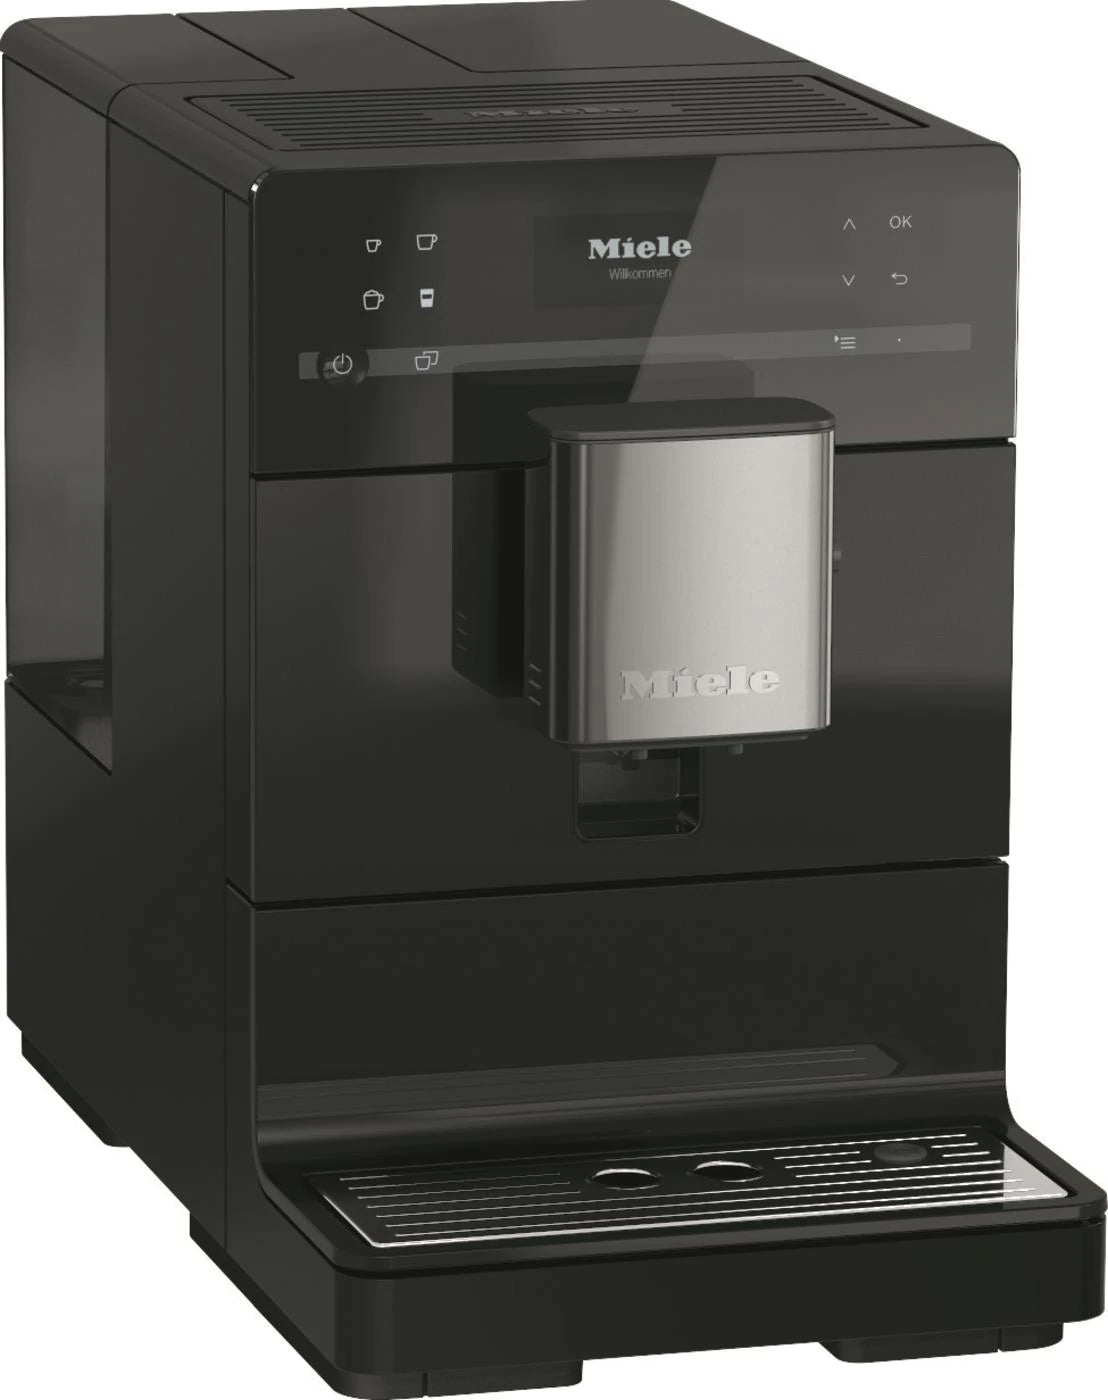 CM5310 Machine à café Silence (Boite ouverte - neuf)